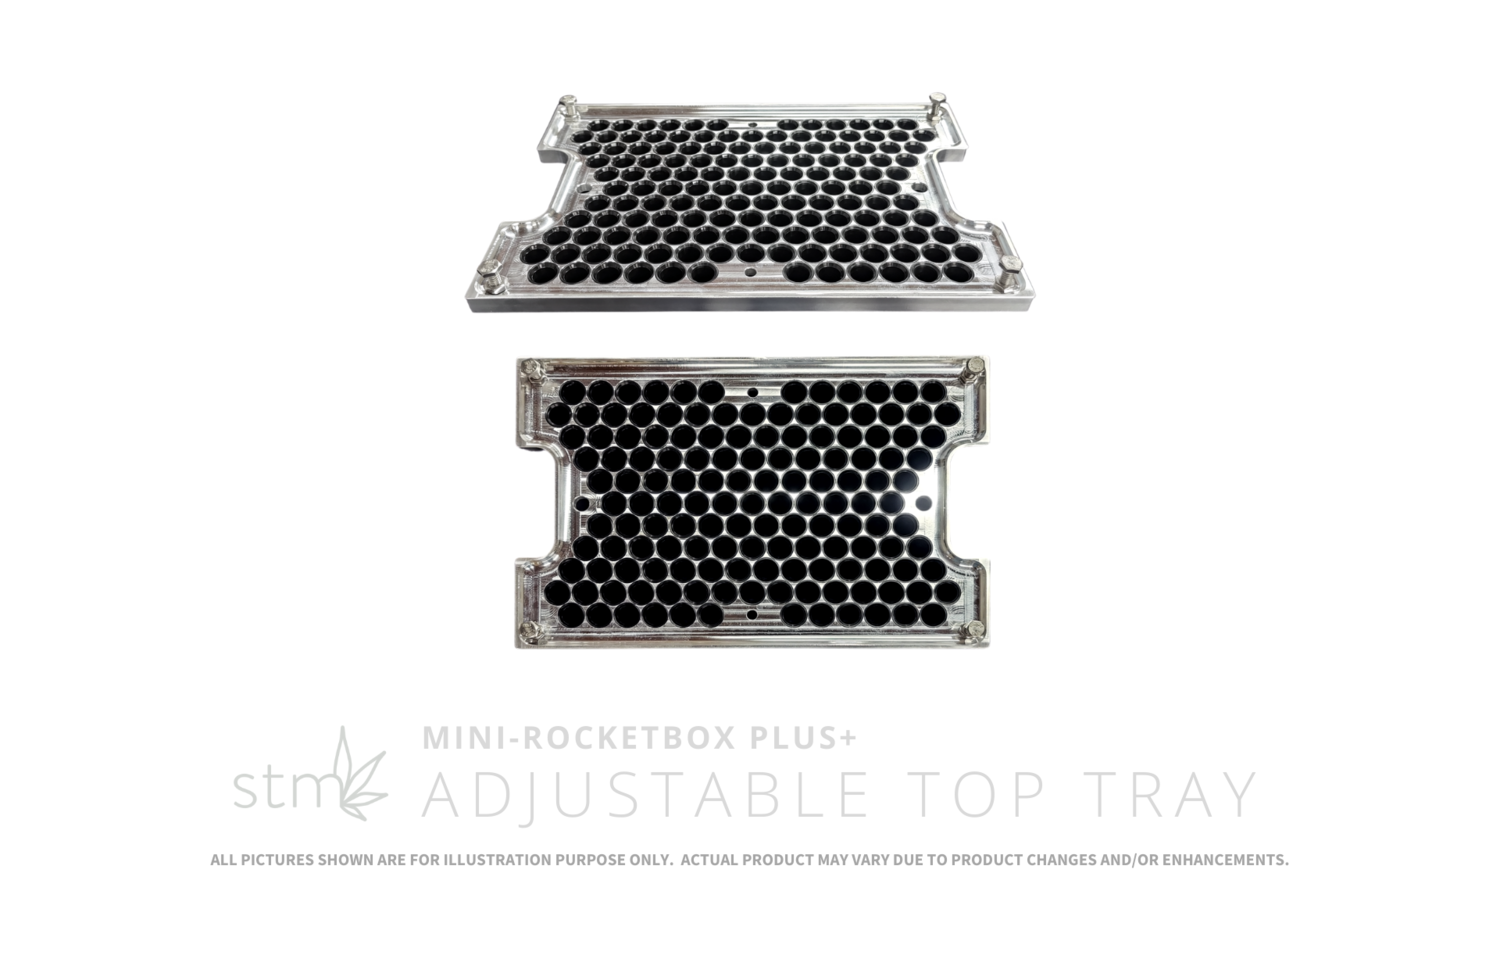 Adjustable Top Tray (Mini-RocketBox PLUS+)